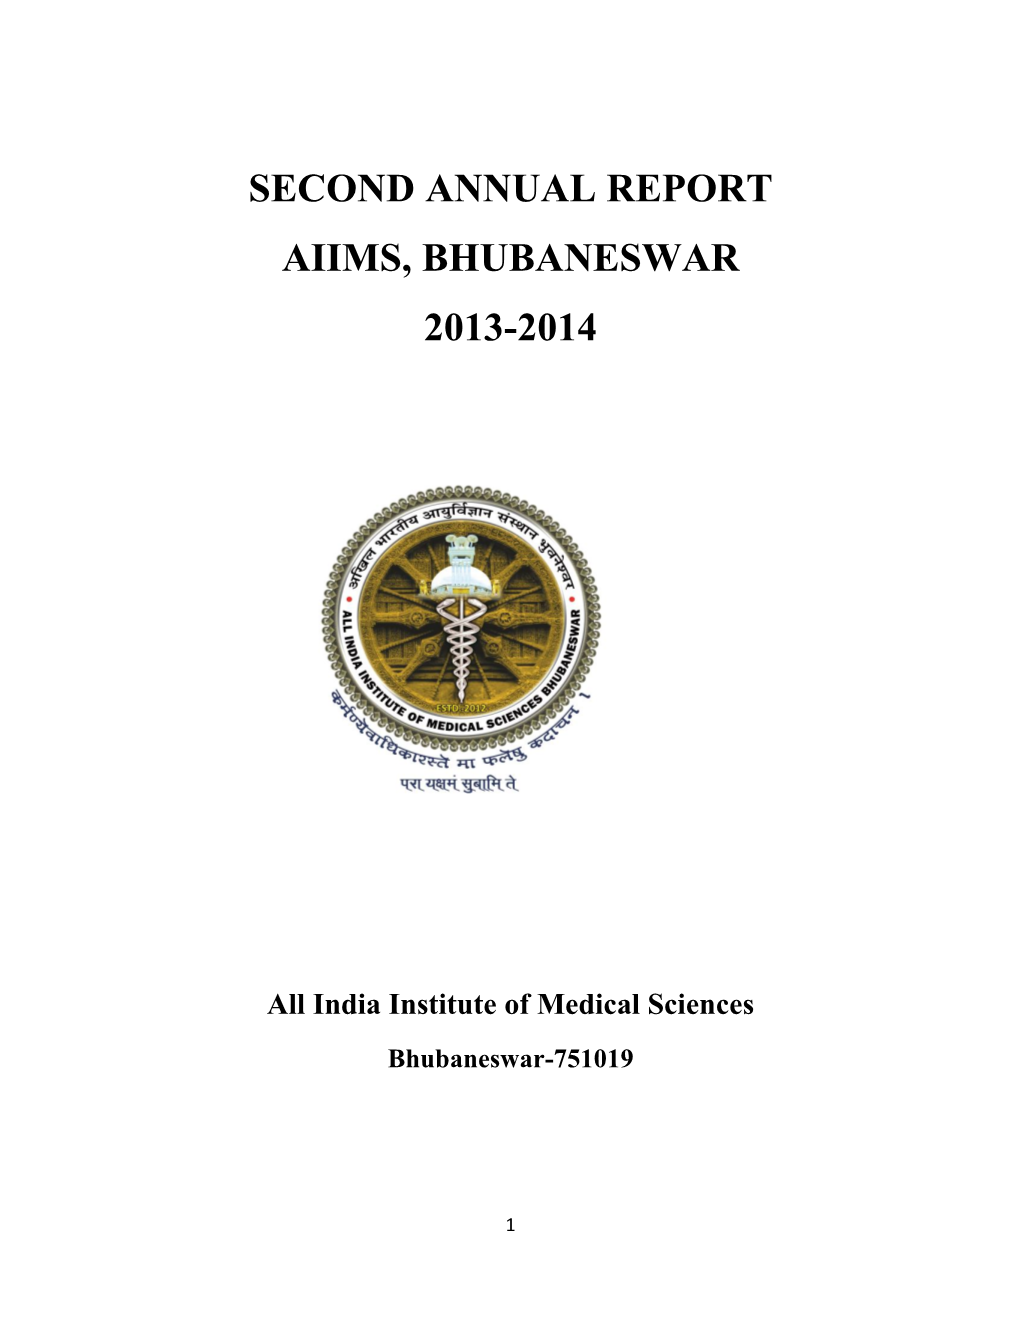 Second Annual Report Aiims, Bhubaneswar 2013-2014